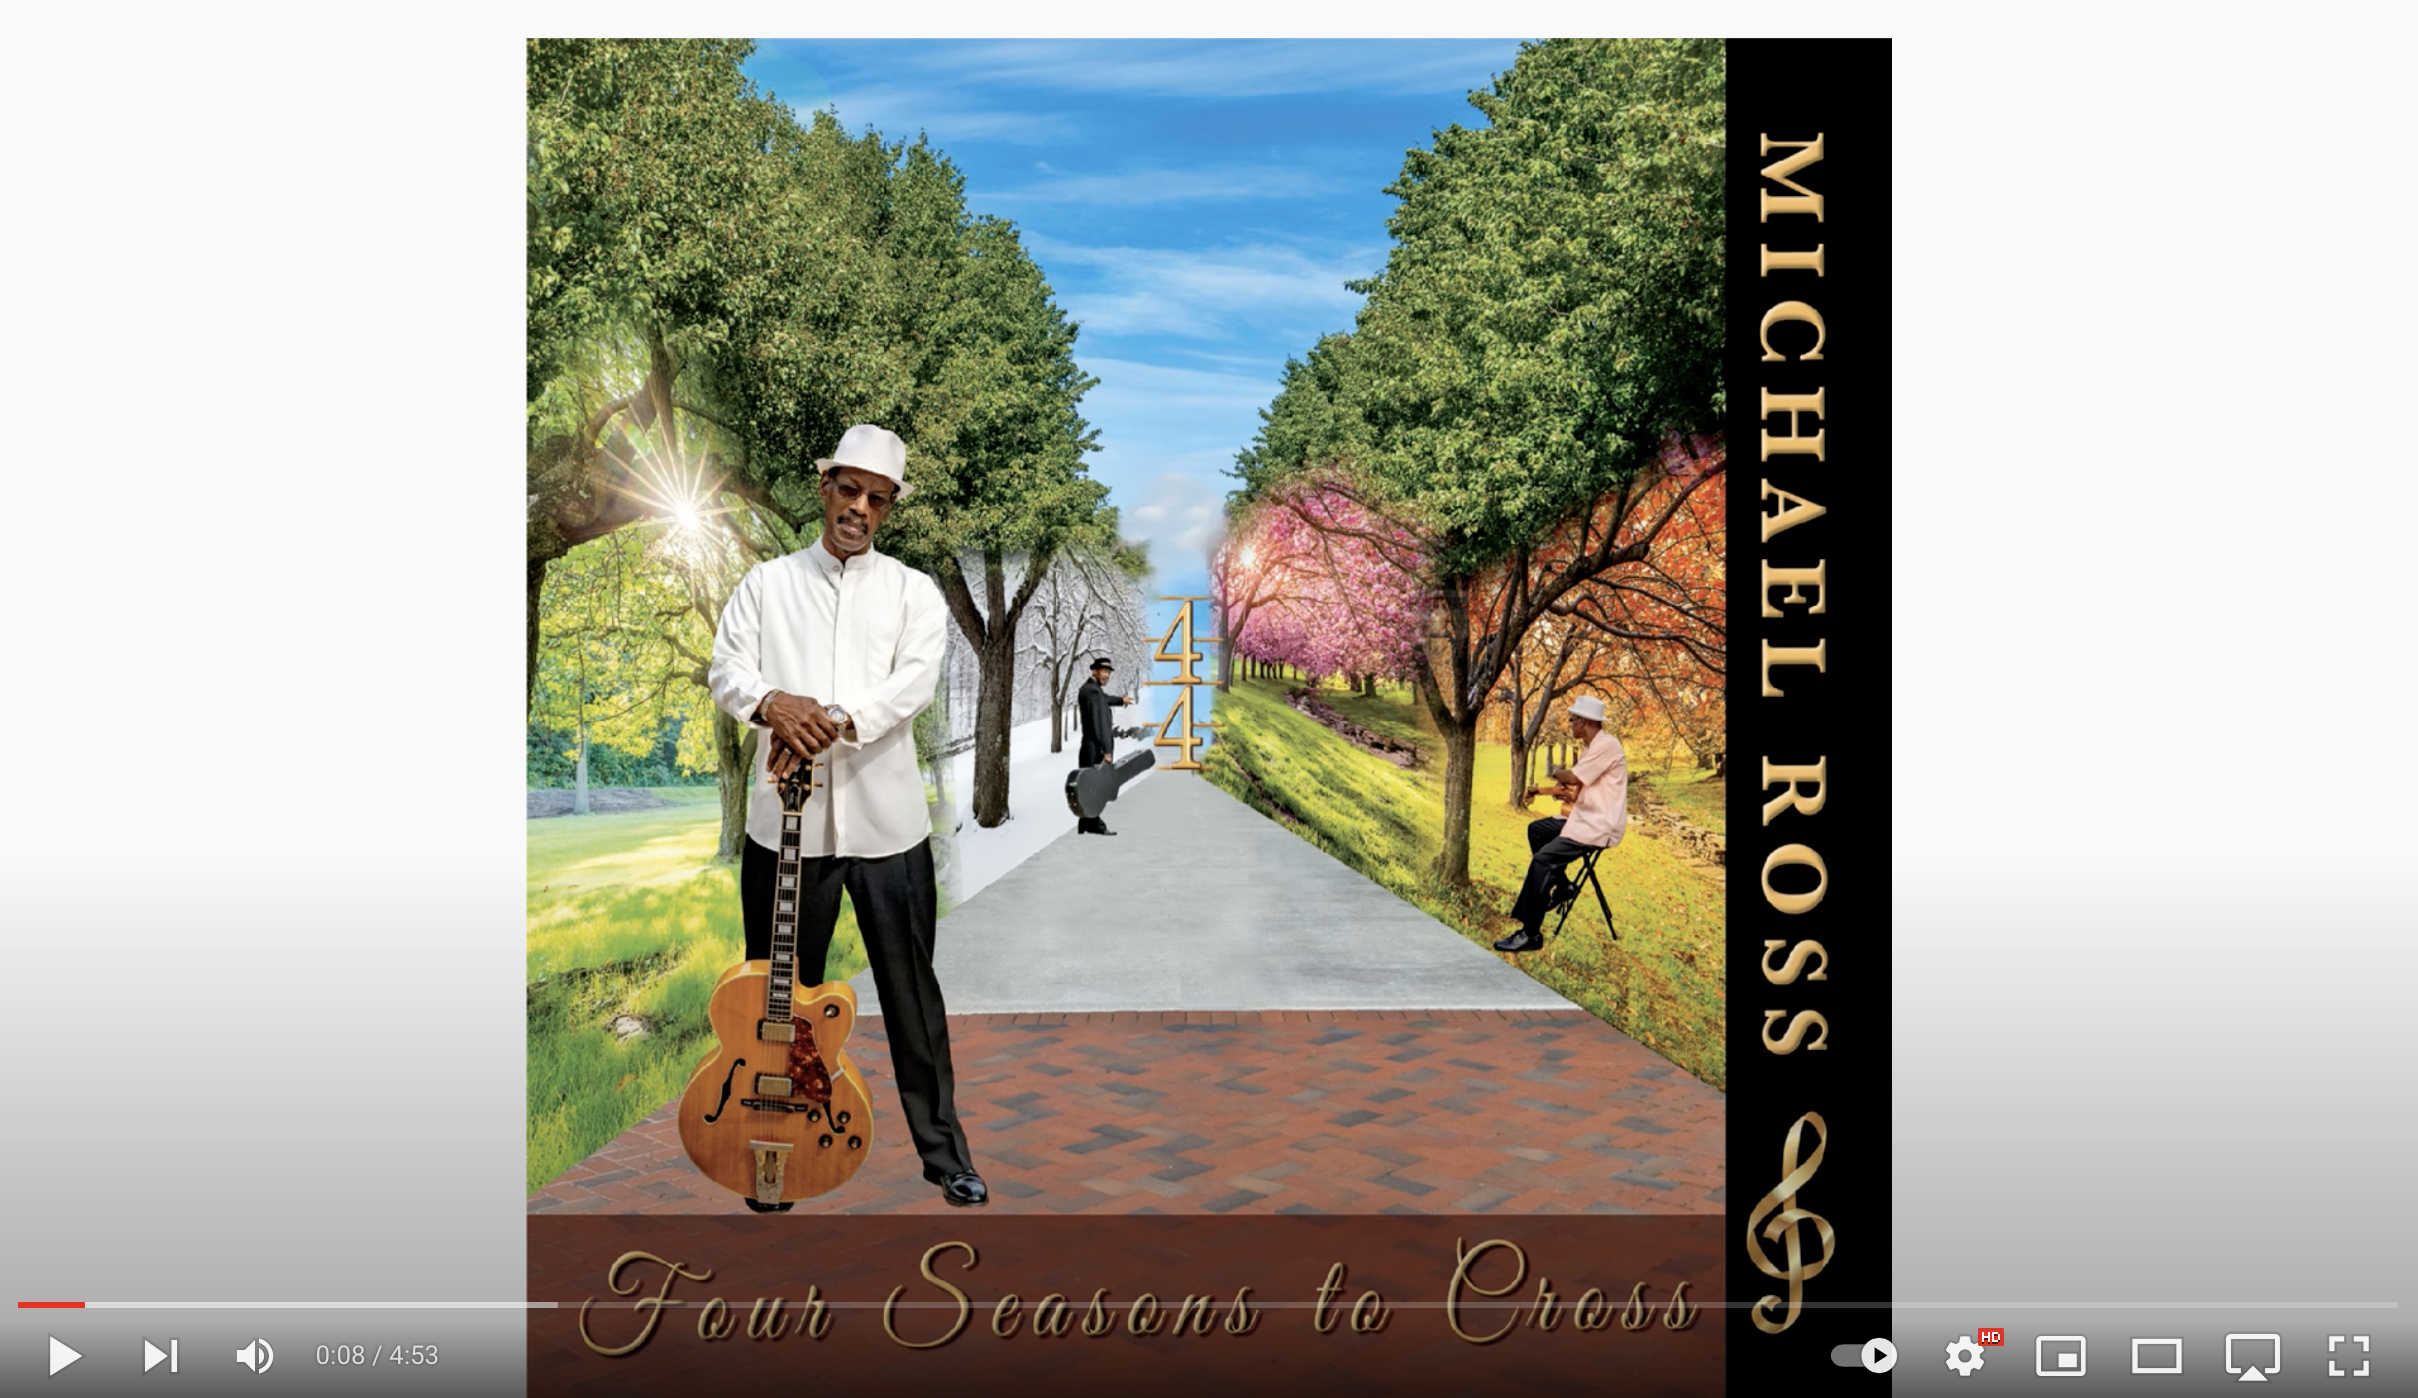 Michael Ross - Four Seasons to Cross